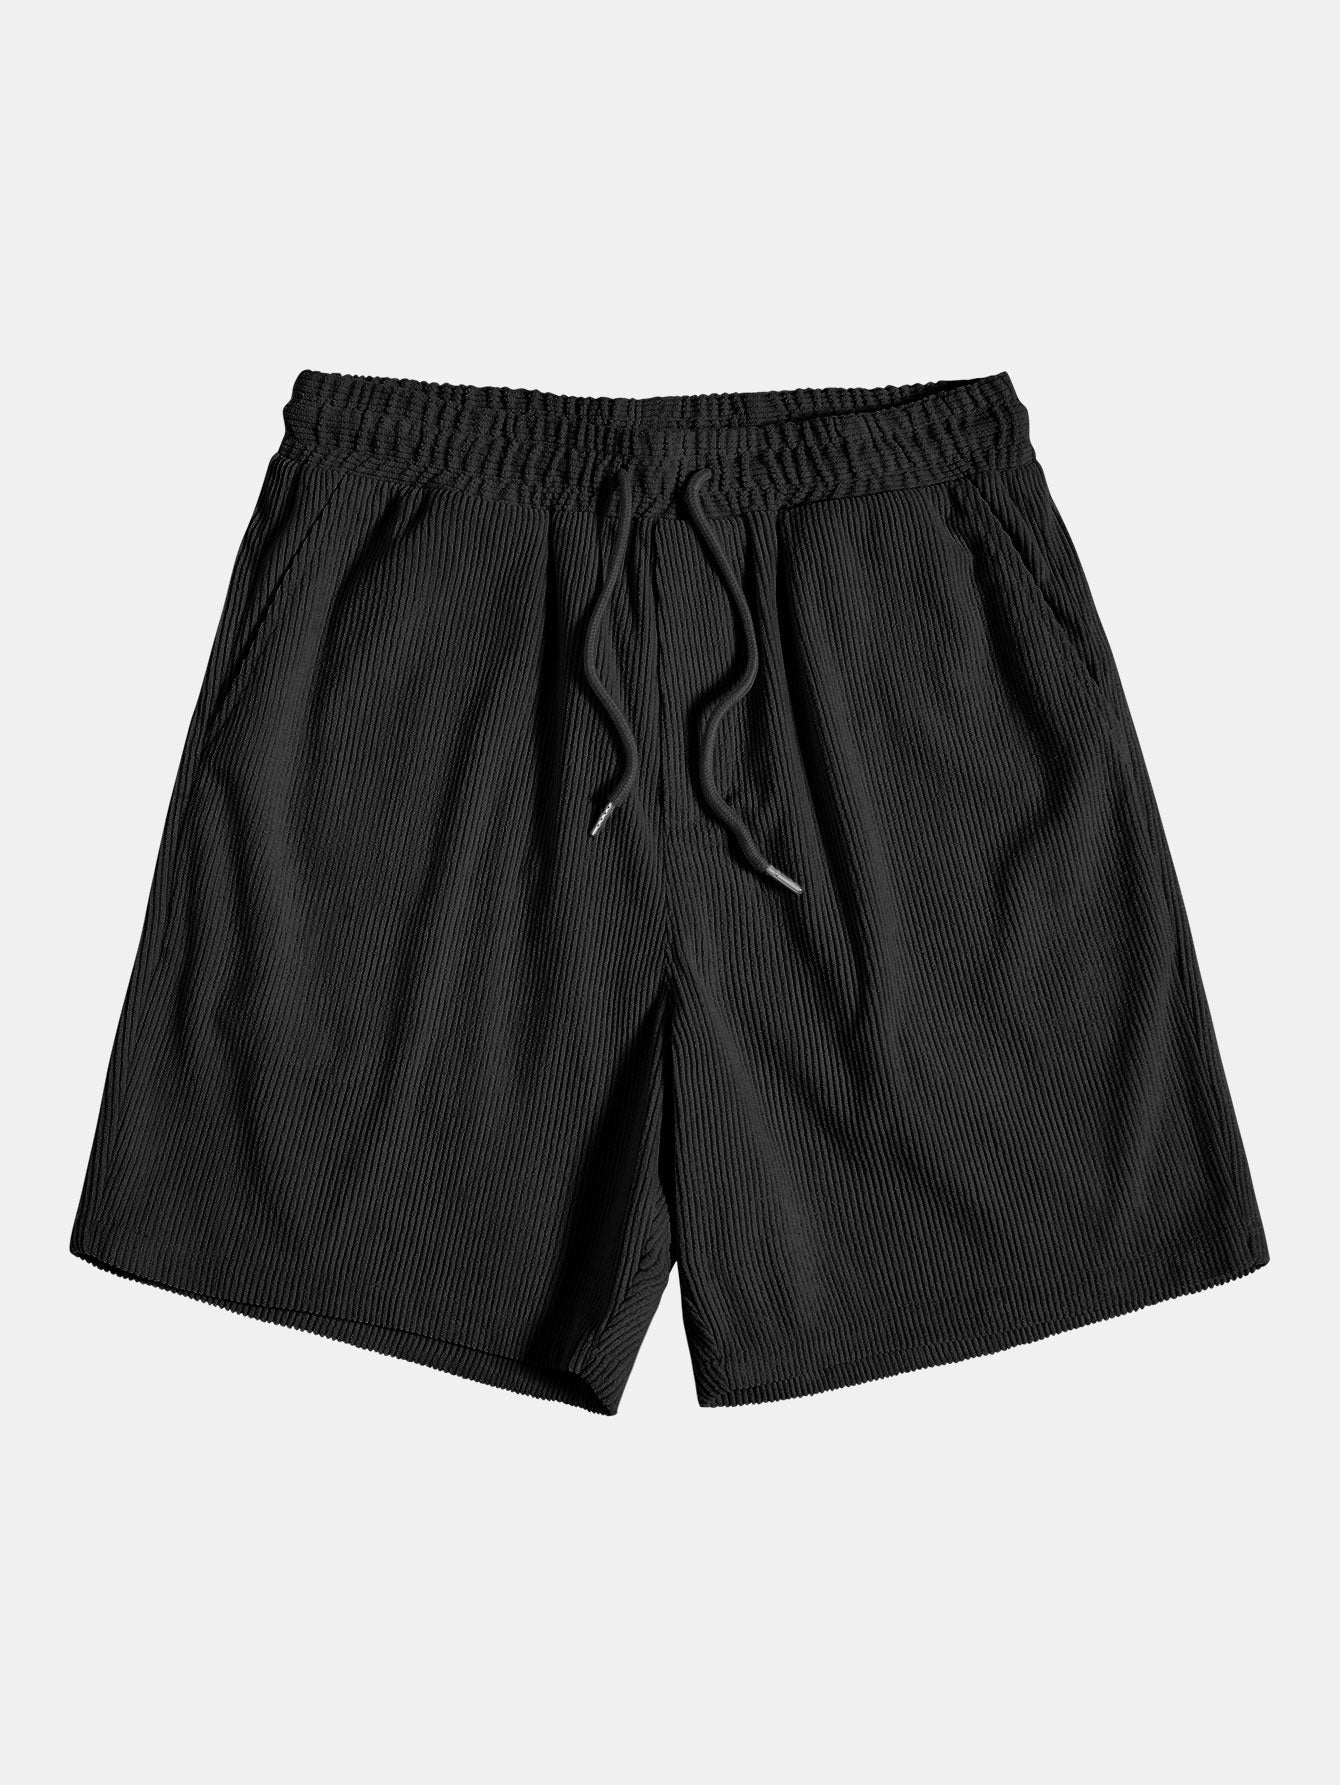 Bali - Short-Sleeved set